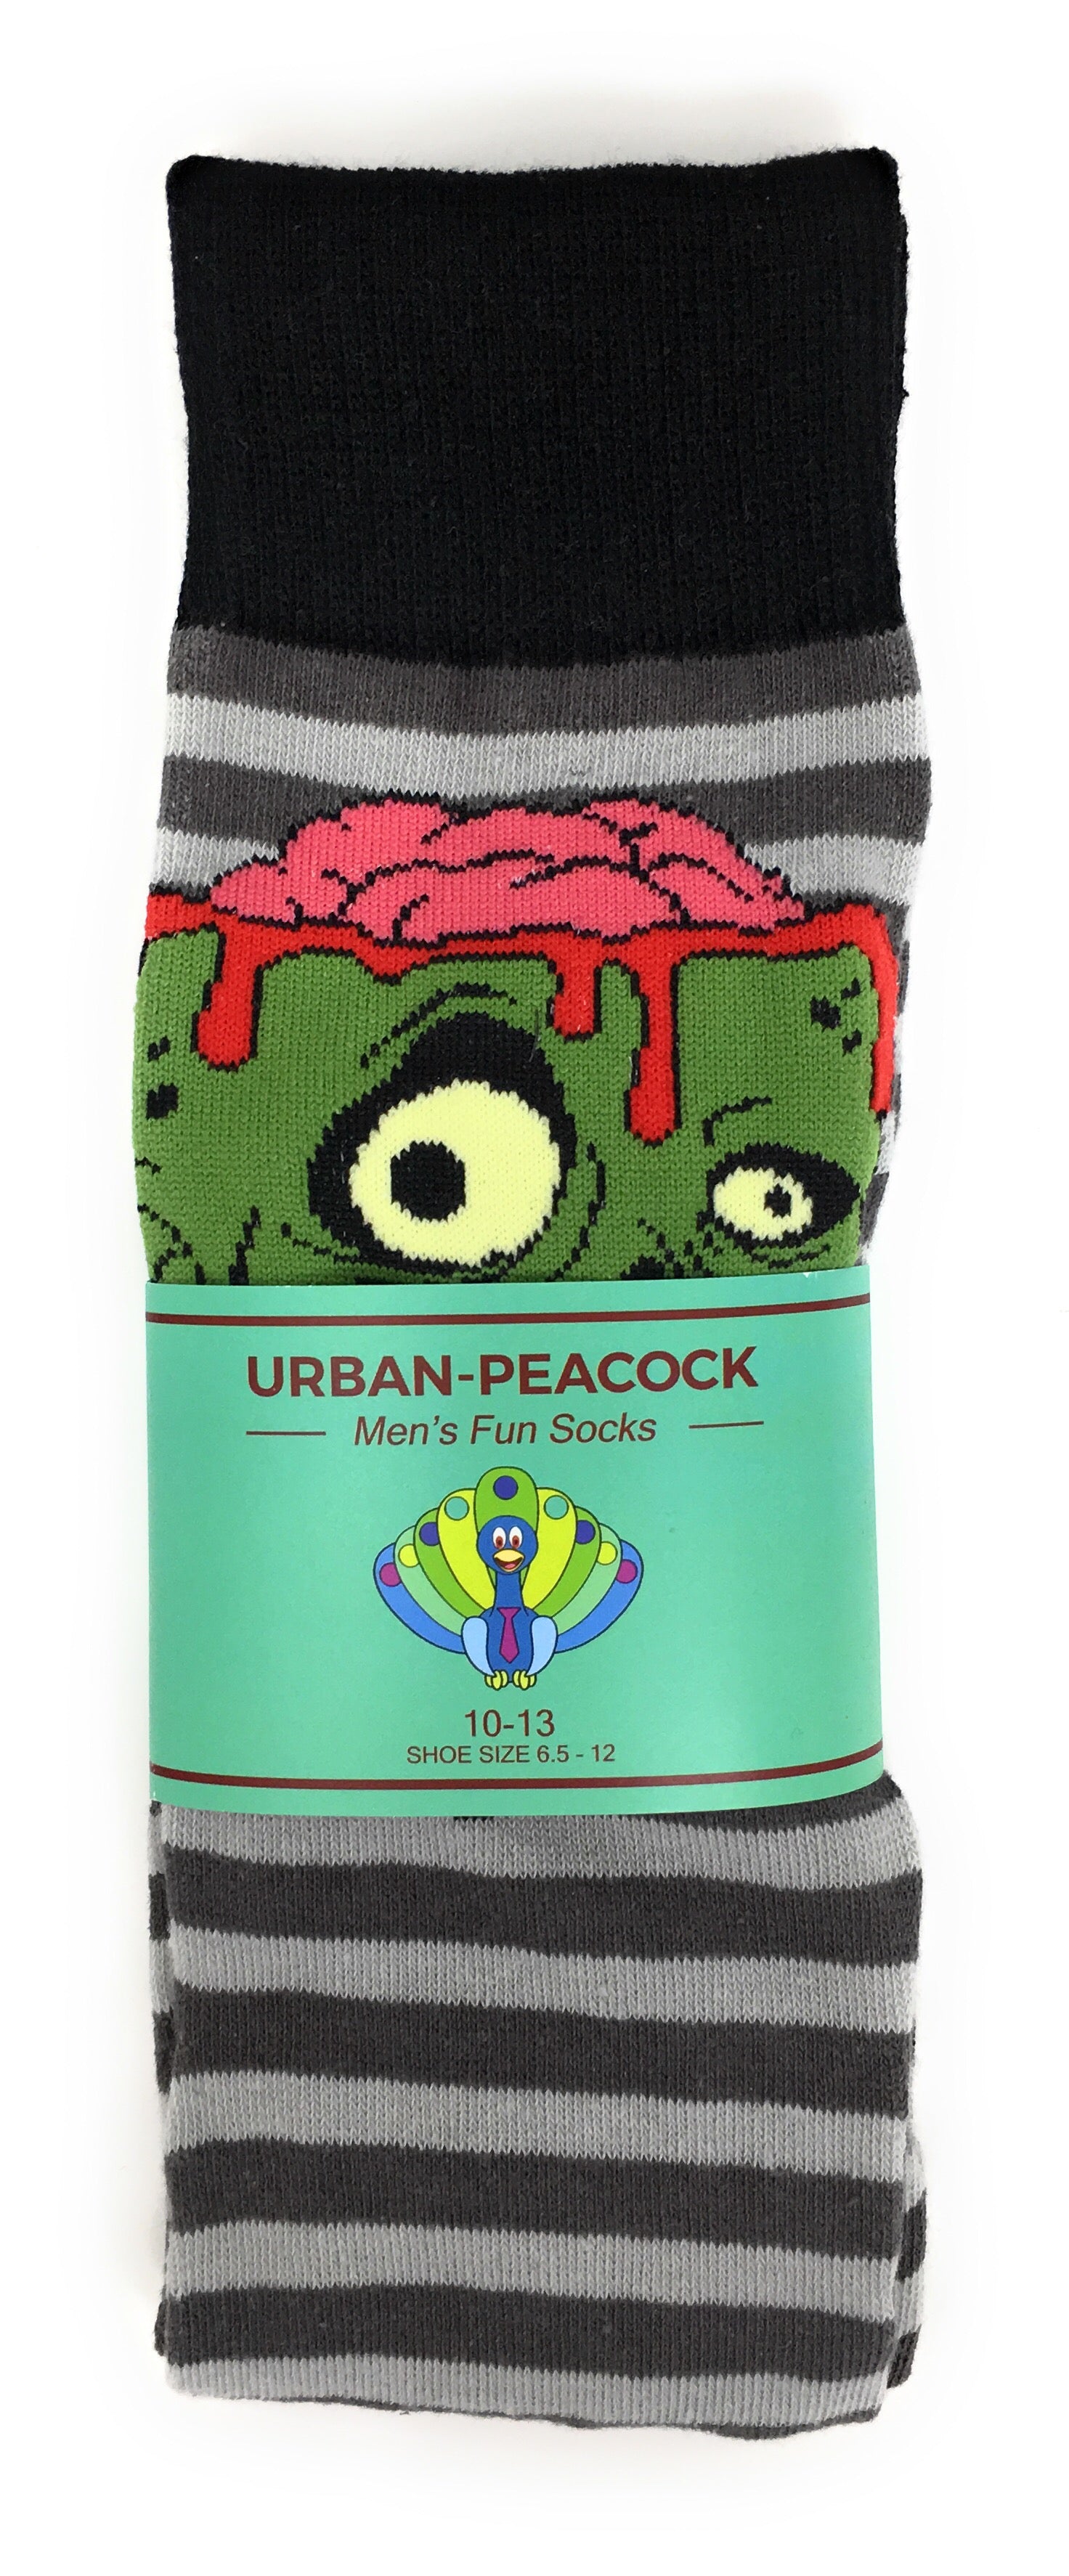 Urban-Peacock Men's Halloween Novelty Socks - Zombie - Grey Striped